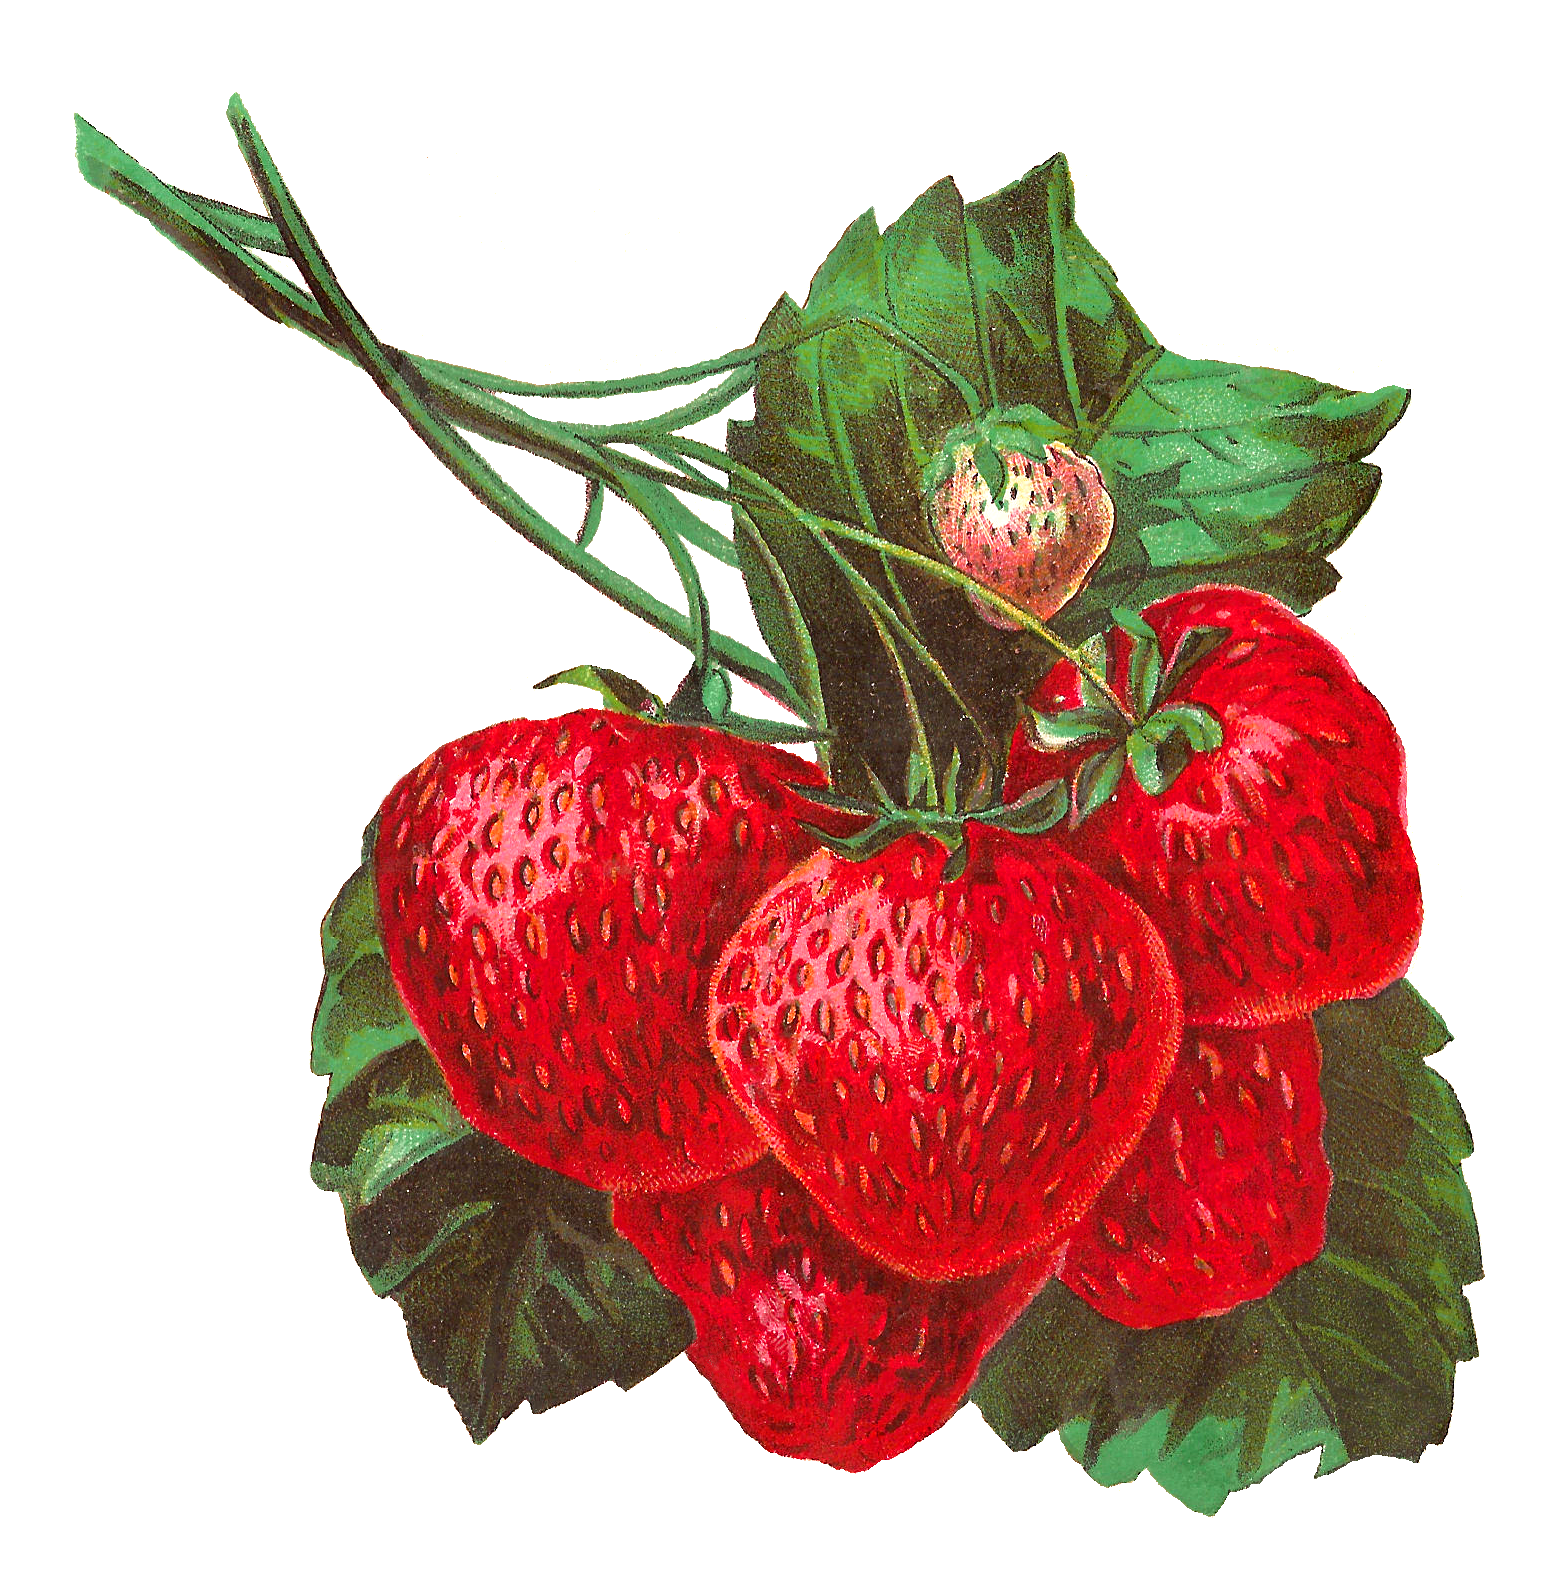 Antique Images Strawberry Stock Digital Image Fruit Clip Art Download